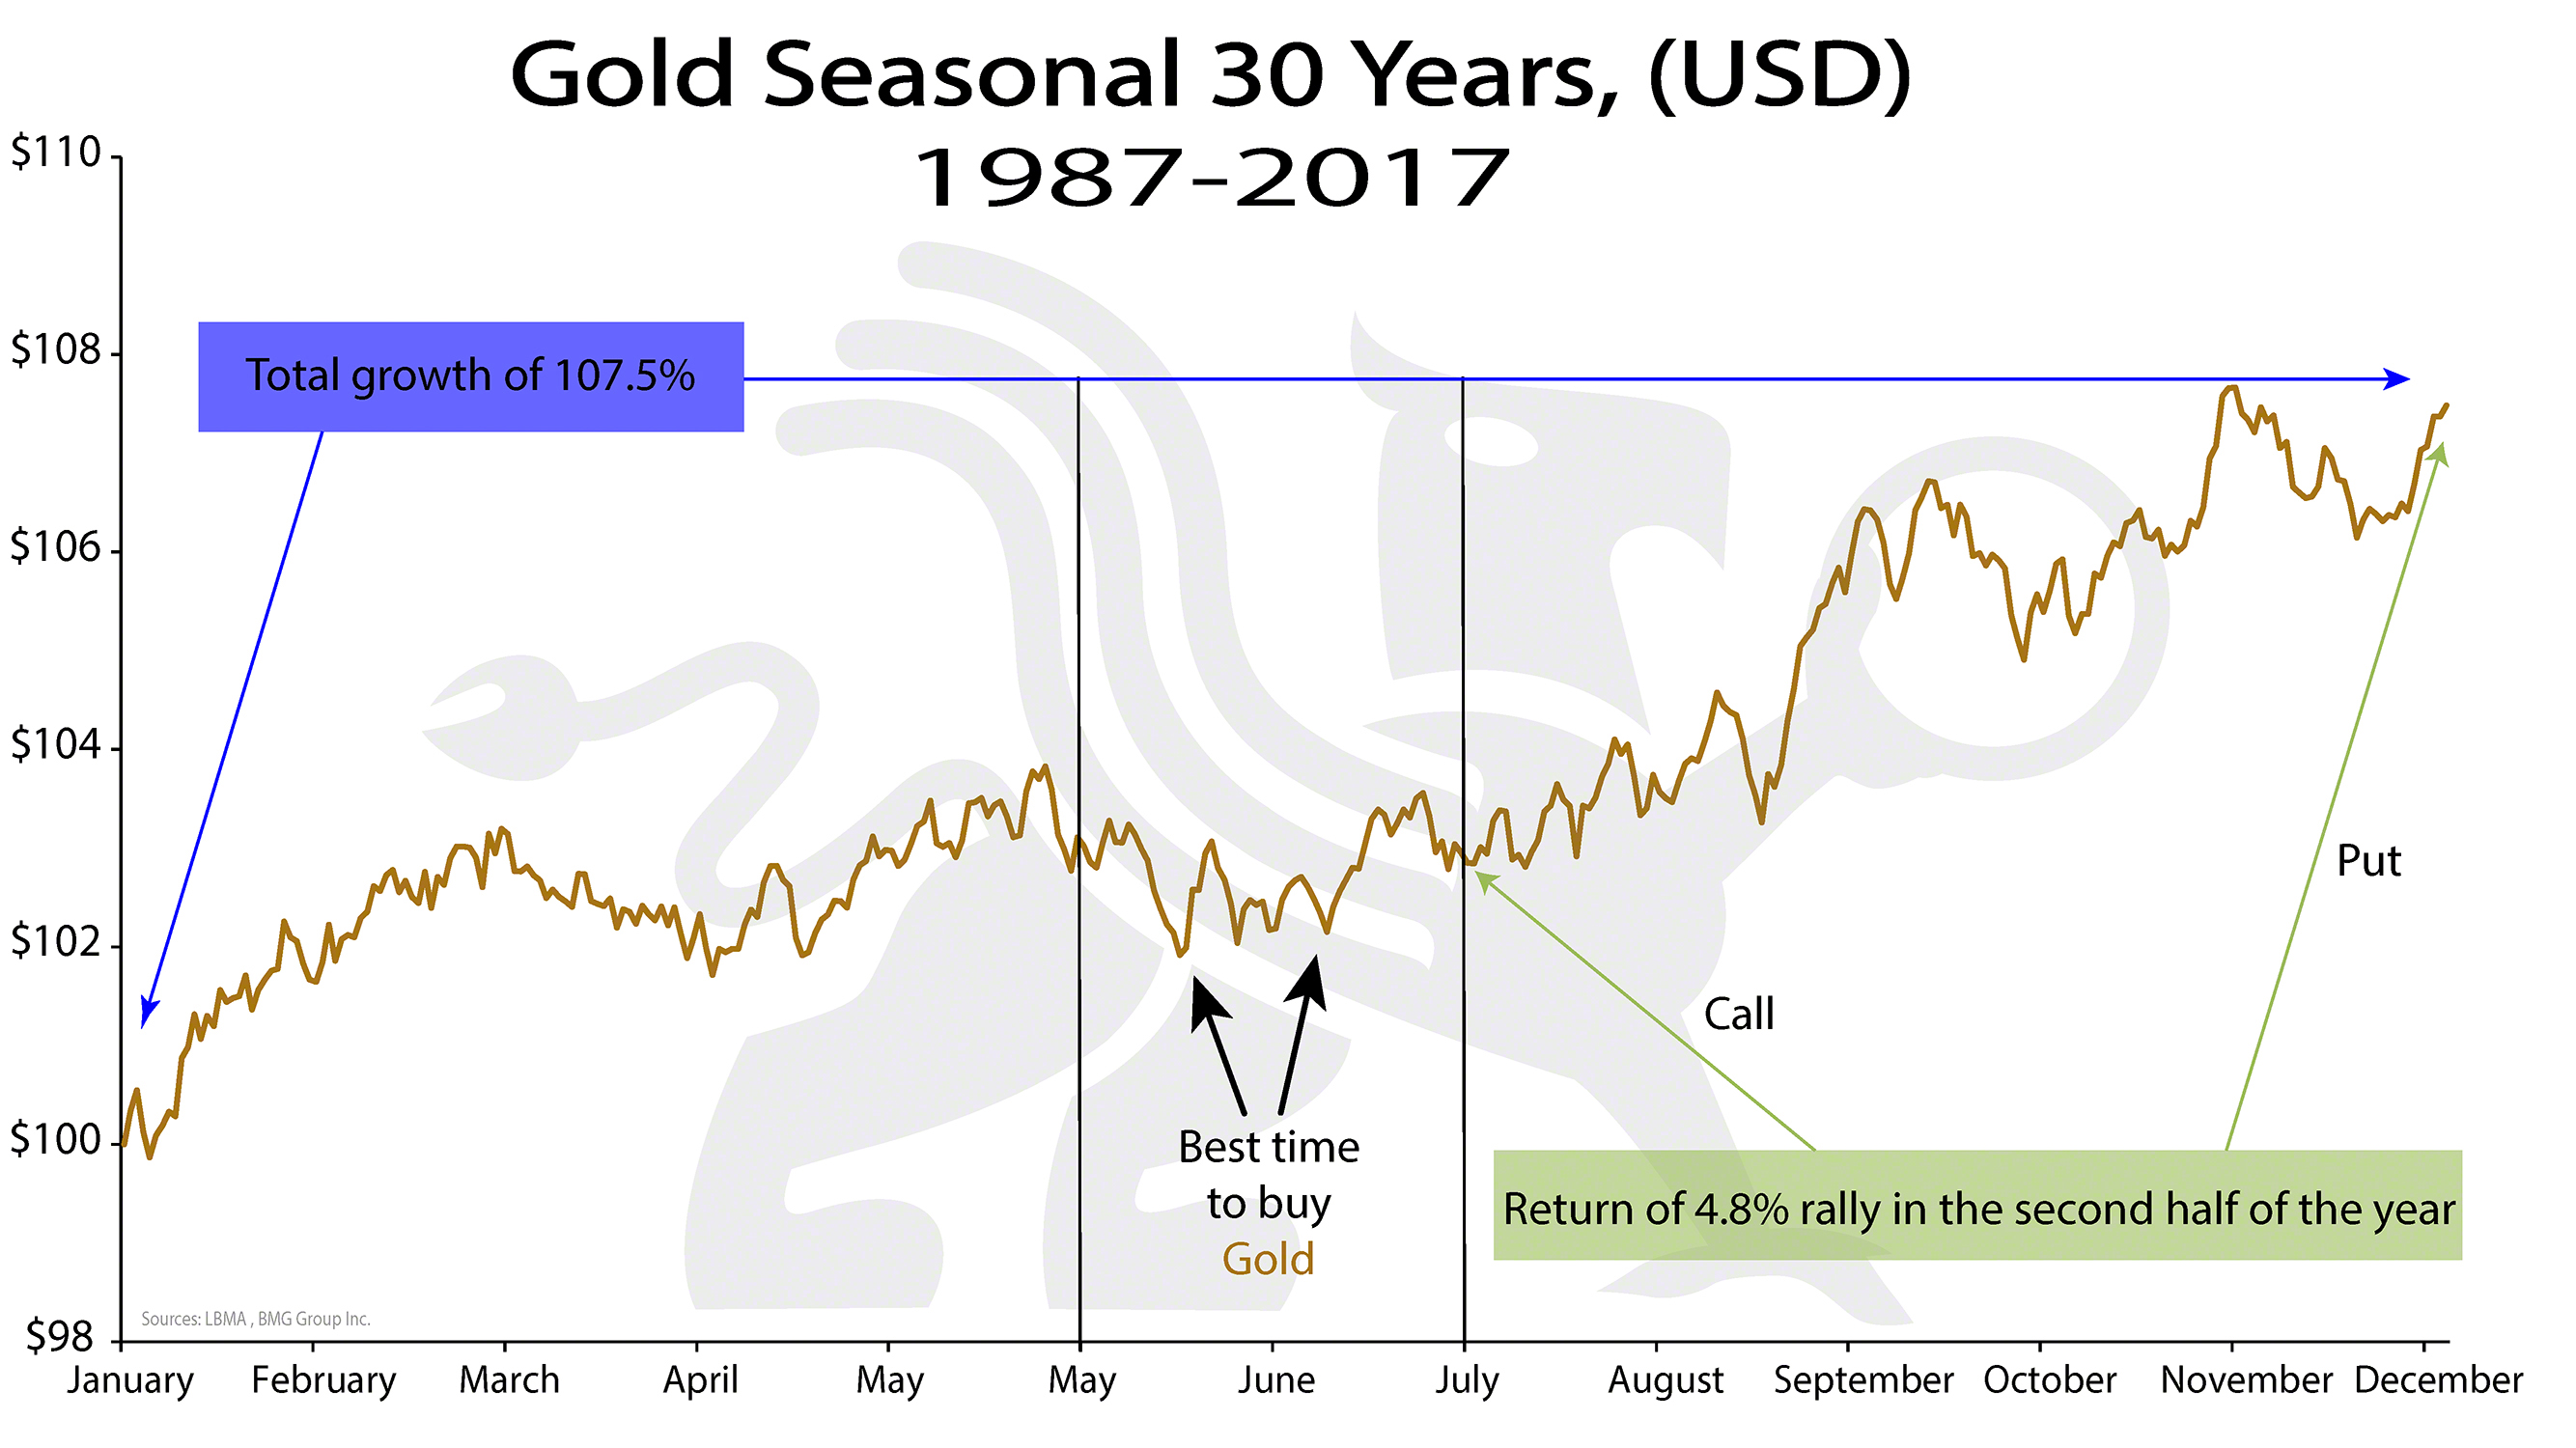 Gold Usd Chart